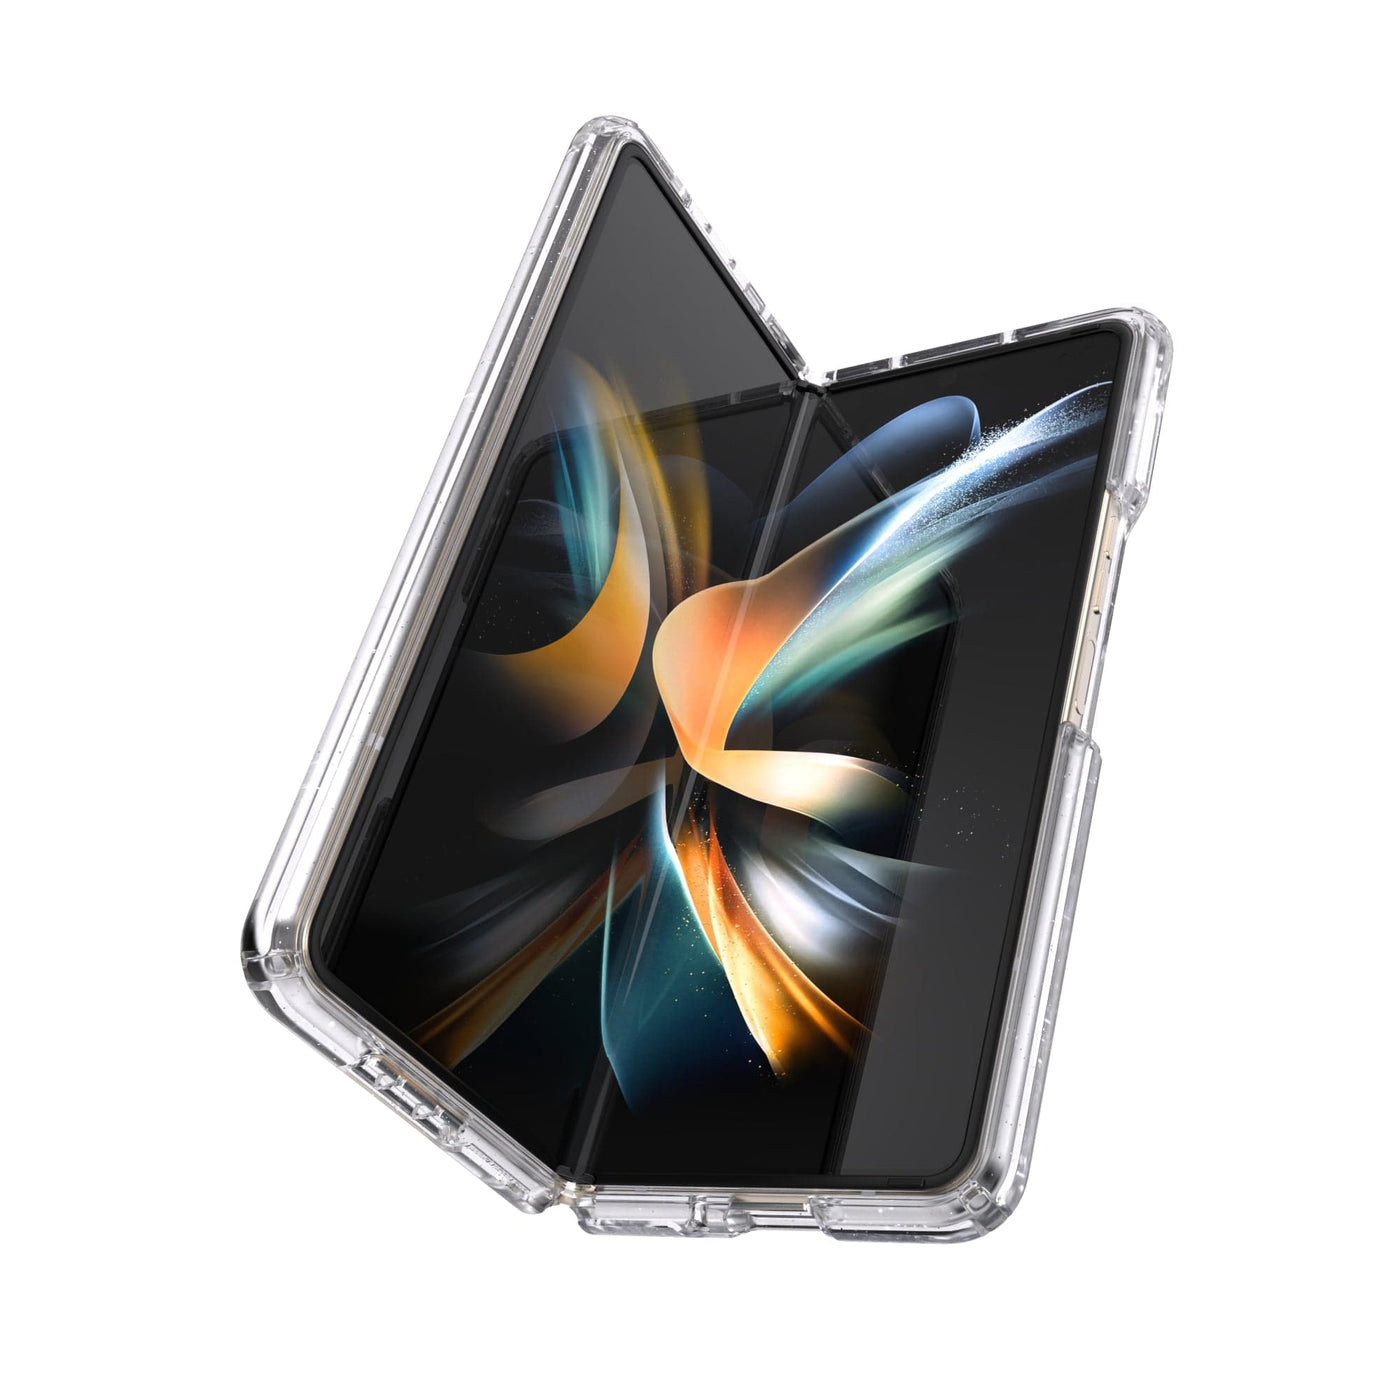 YIFVTFCK 3 in 1 Case for Galaxy Z Fold 4 Build-in Glass Screen